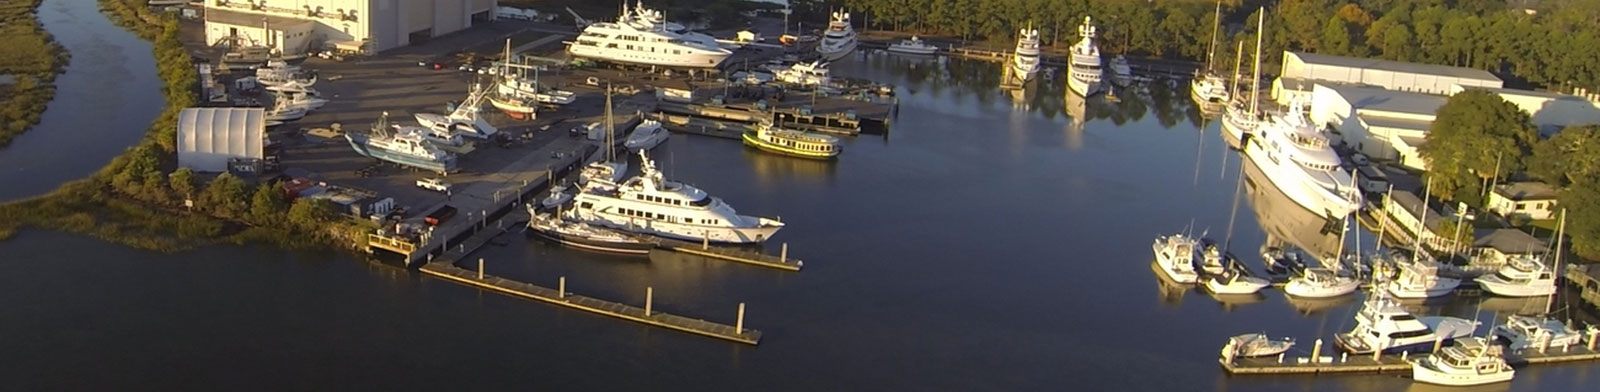 Experience Southern Hospitality at Thunderbolt Marine – Wilmington River